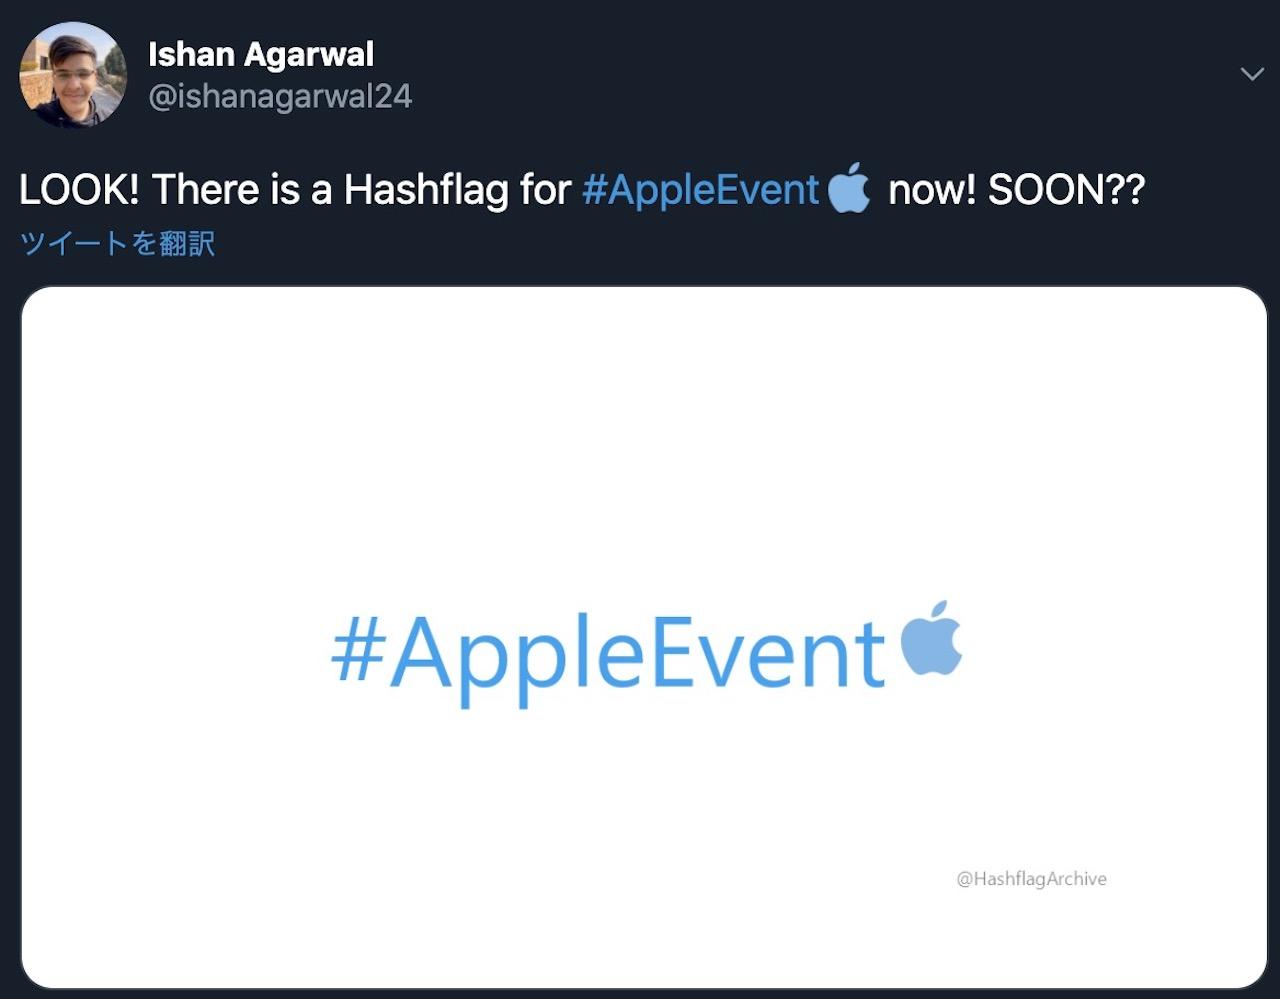 #AppleEvent ハッシュタグがツイッターに登場 今夜はなにかが起きる？